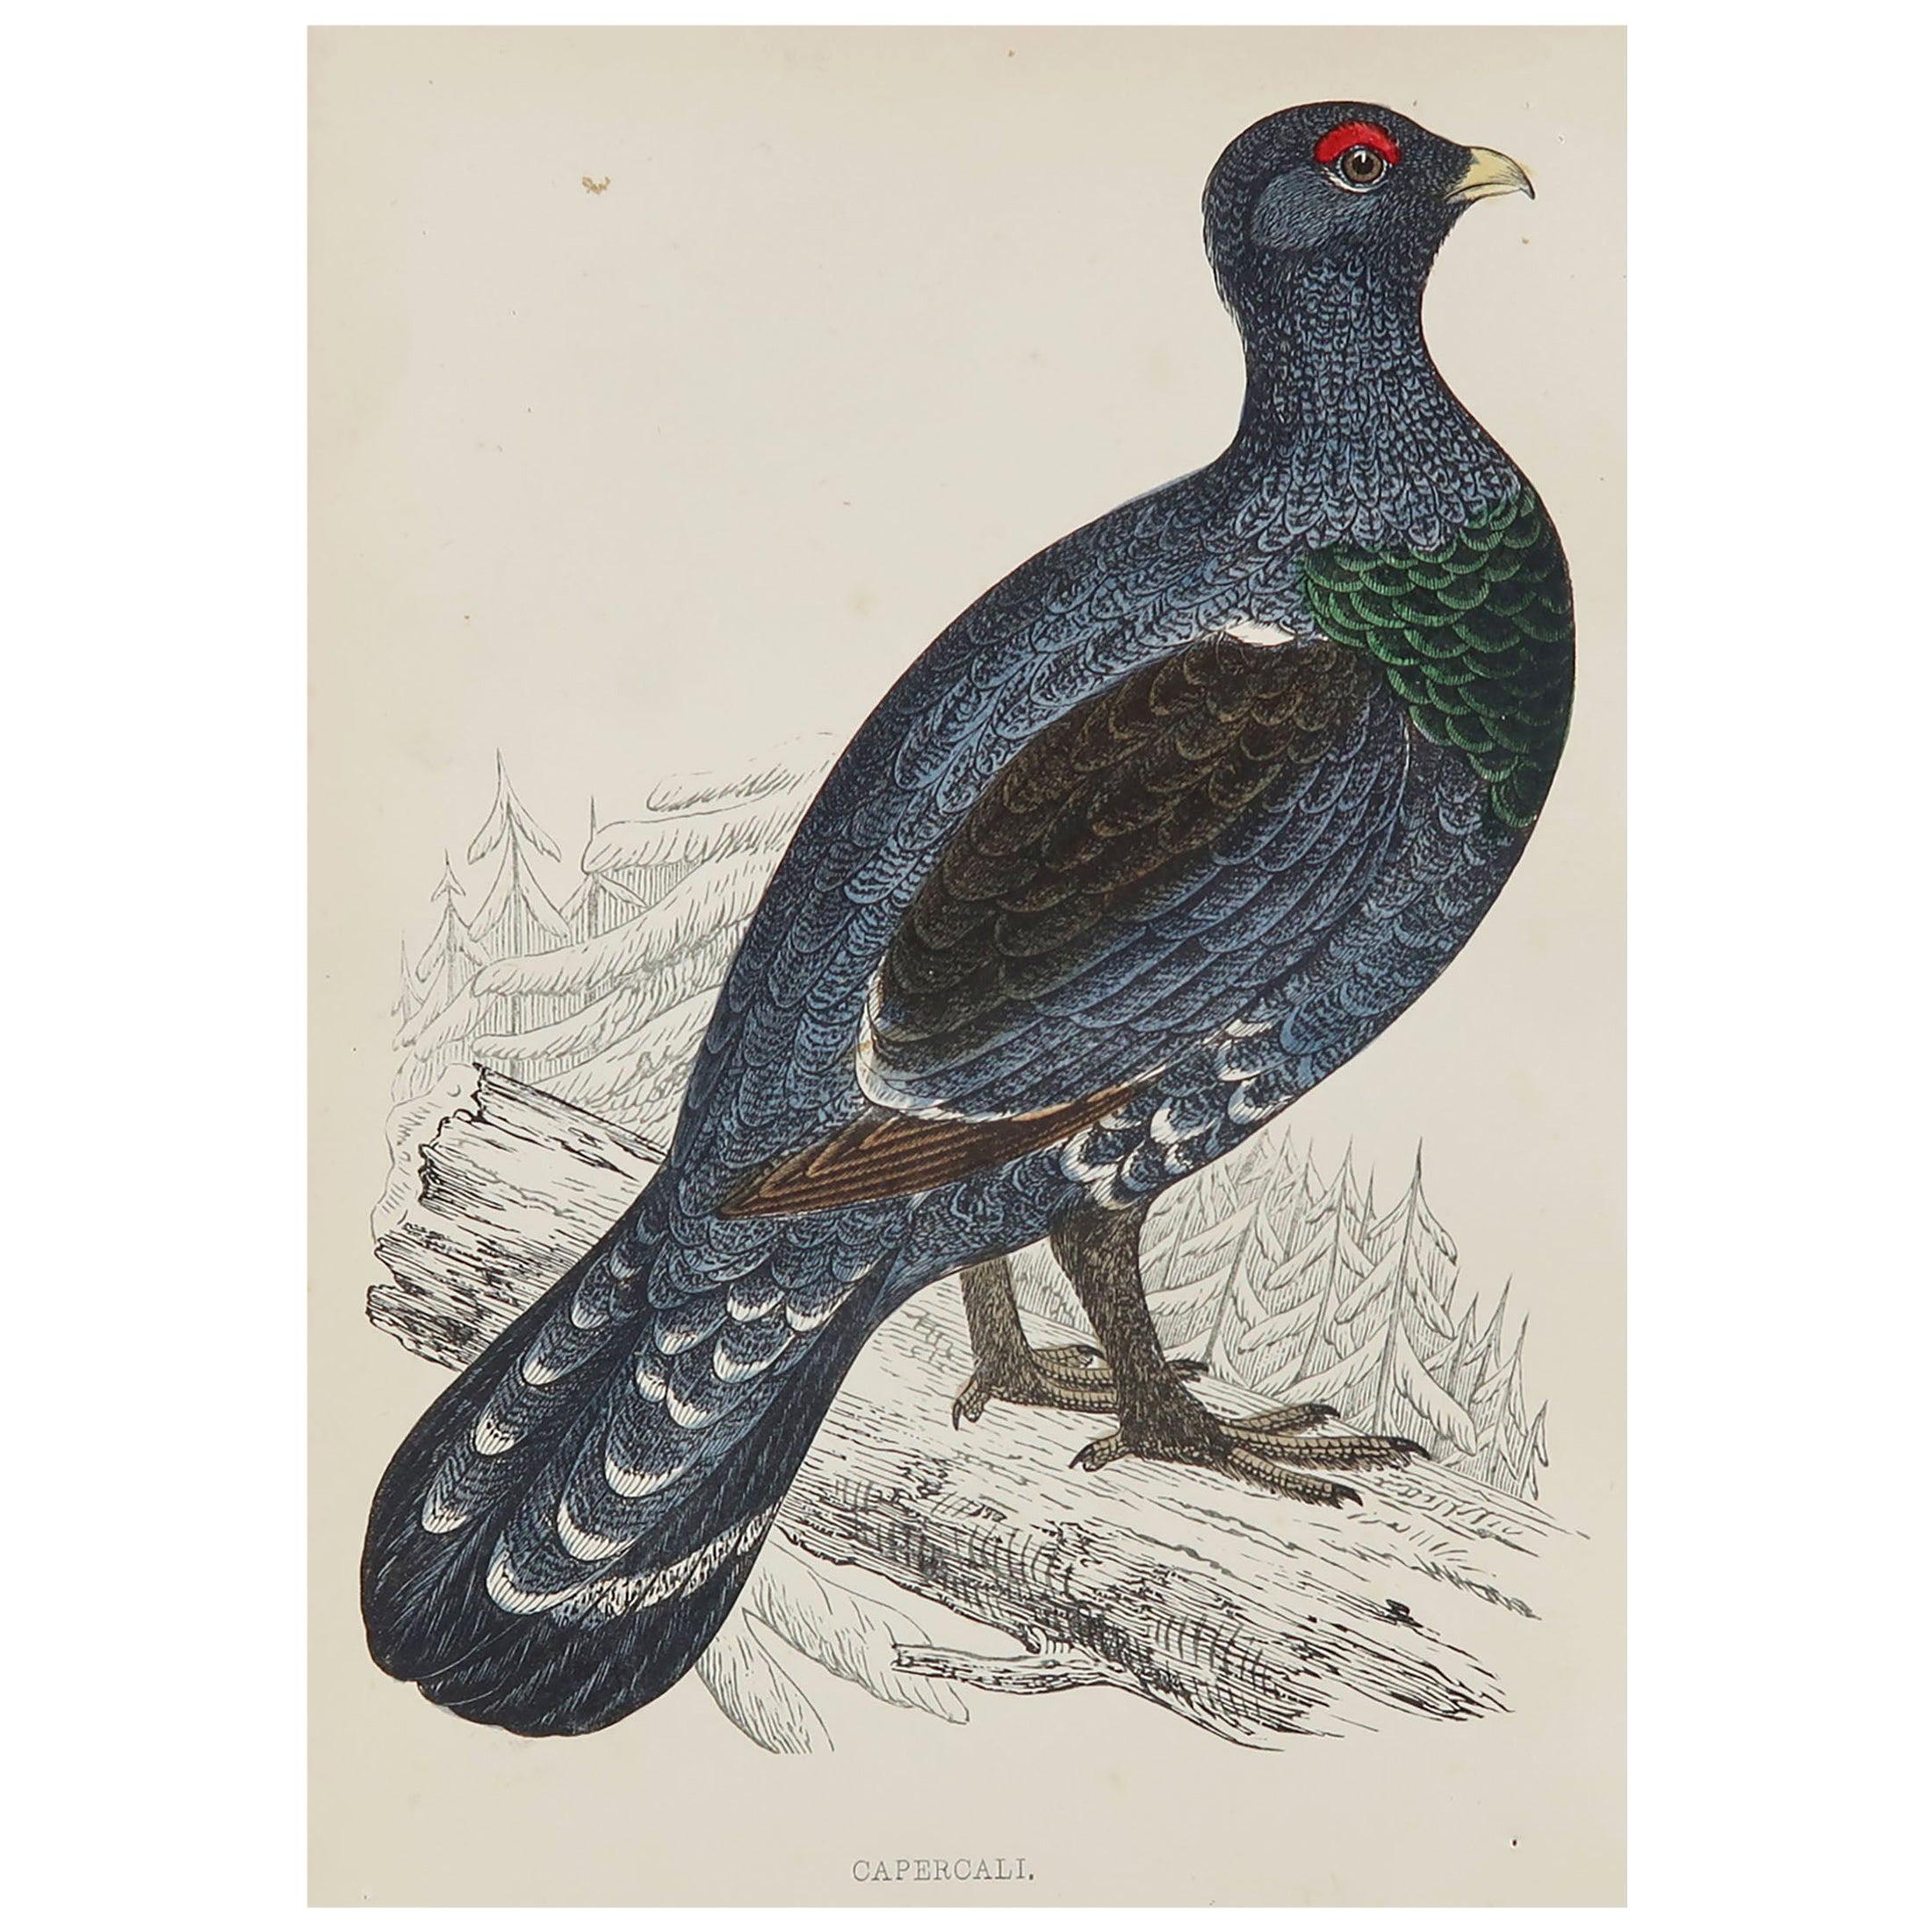 Original Antique Bird Print, the Capercaillie, circa 1870